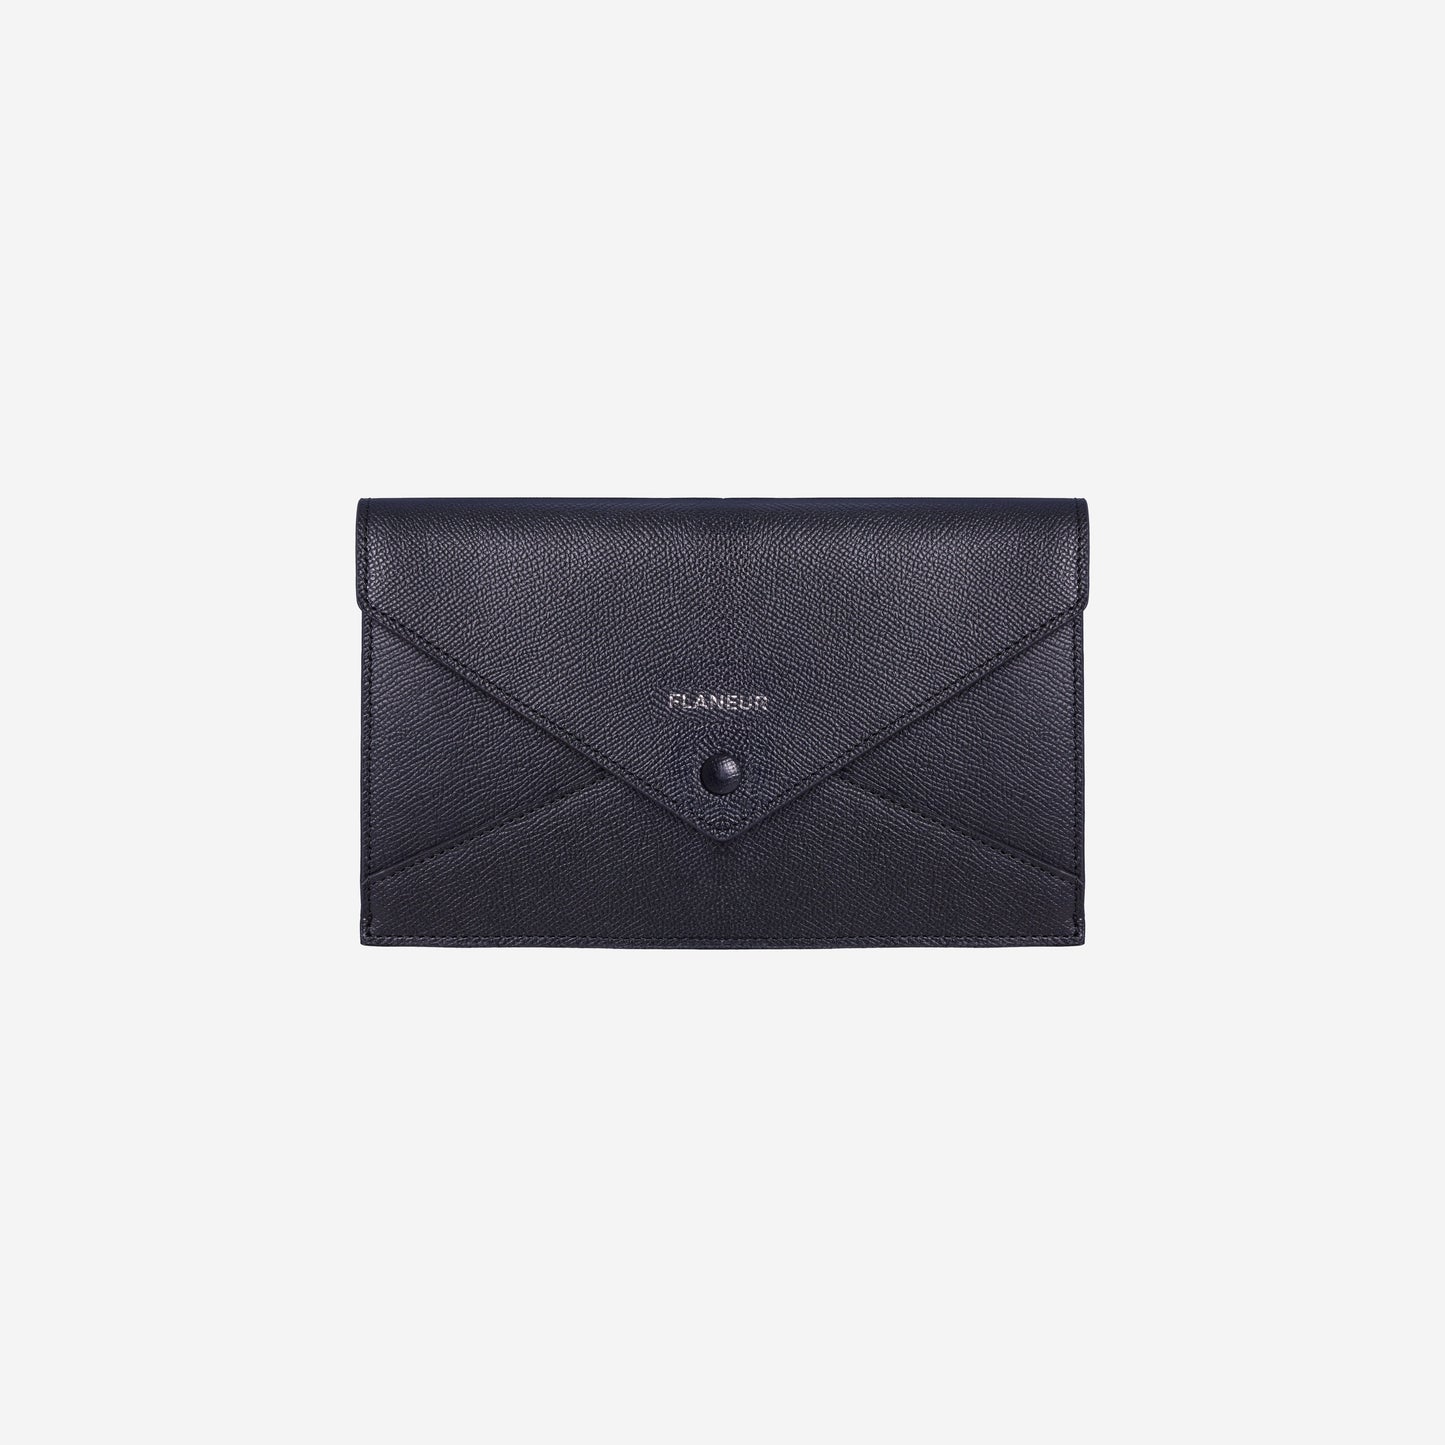 Enveloppe Clutch Black